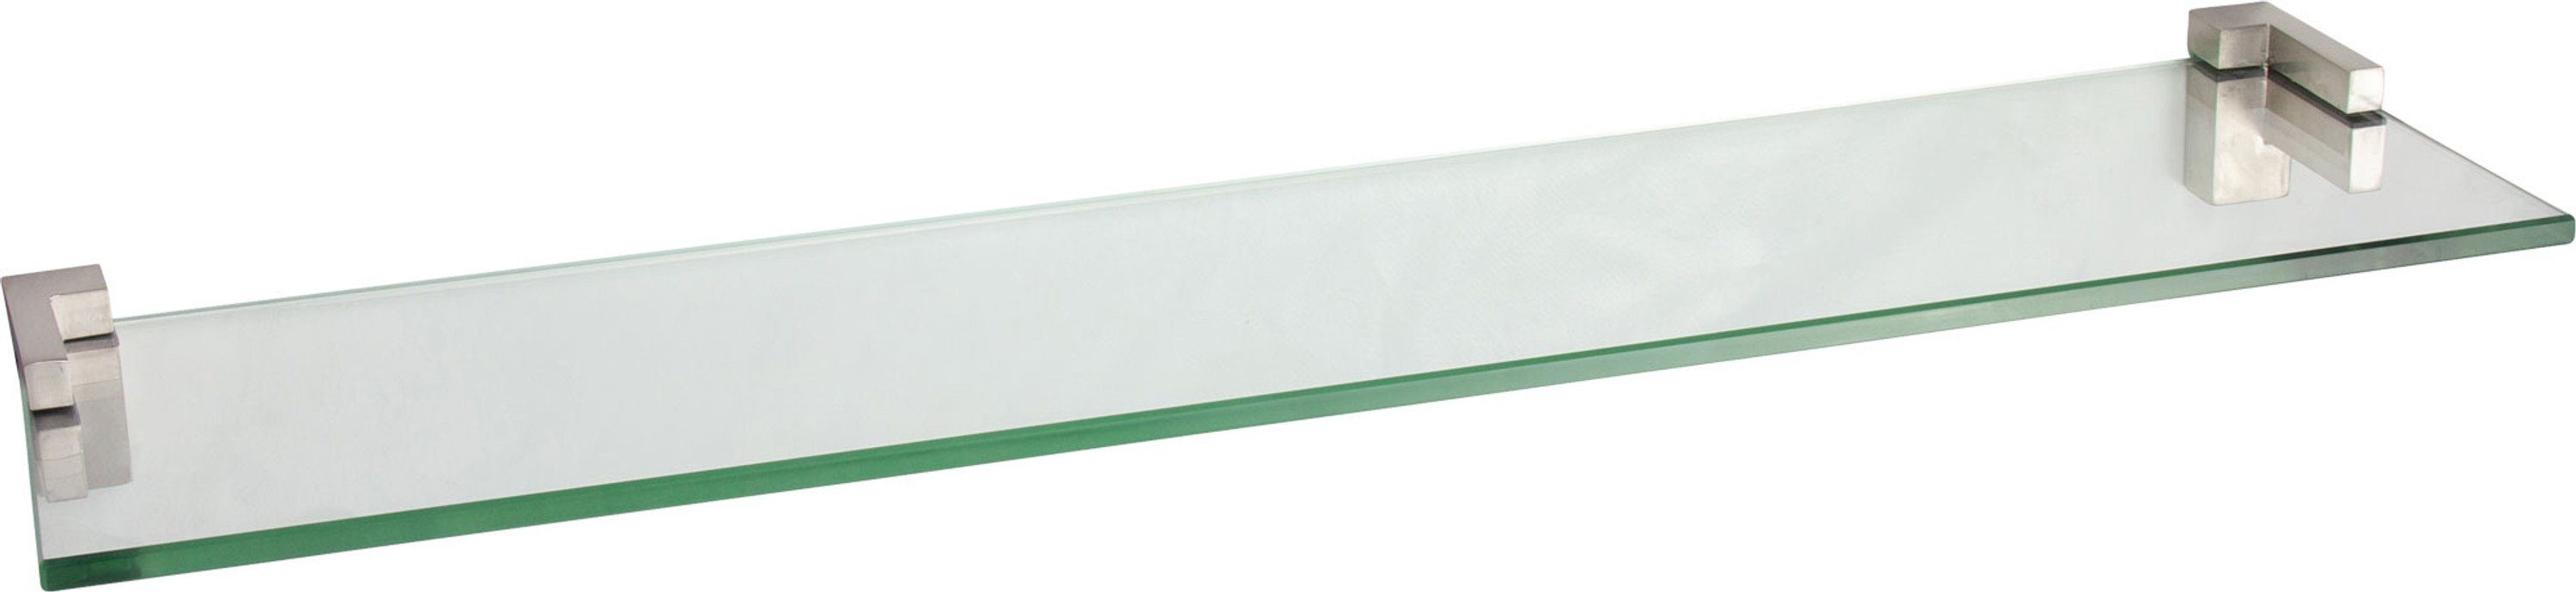 ib style Wandregal Glasregal 8mm eckig klar 40 x 15 cm + Clip PIAZZA, Glasboden aus ESG-Sicherheitsglas - Wandregal